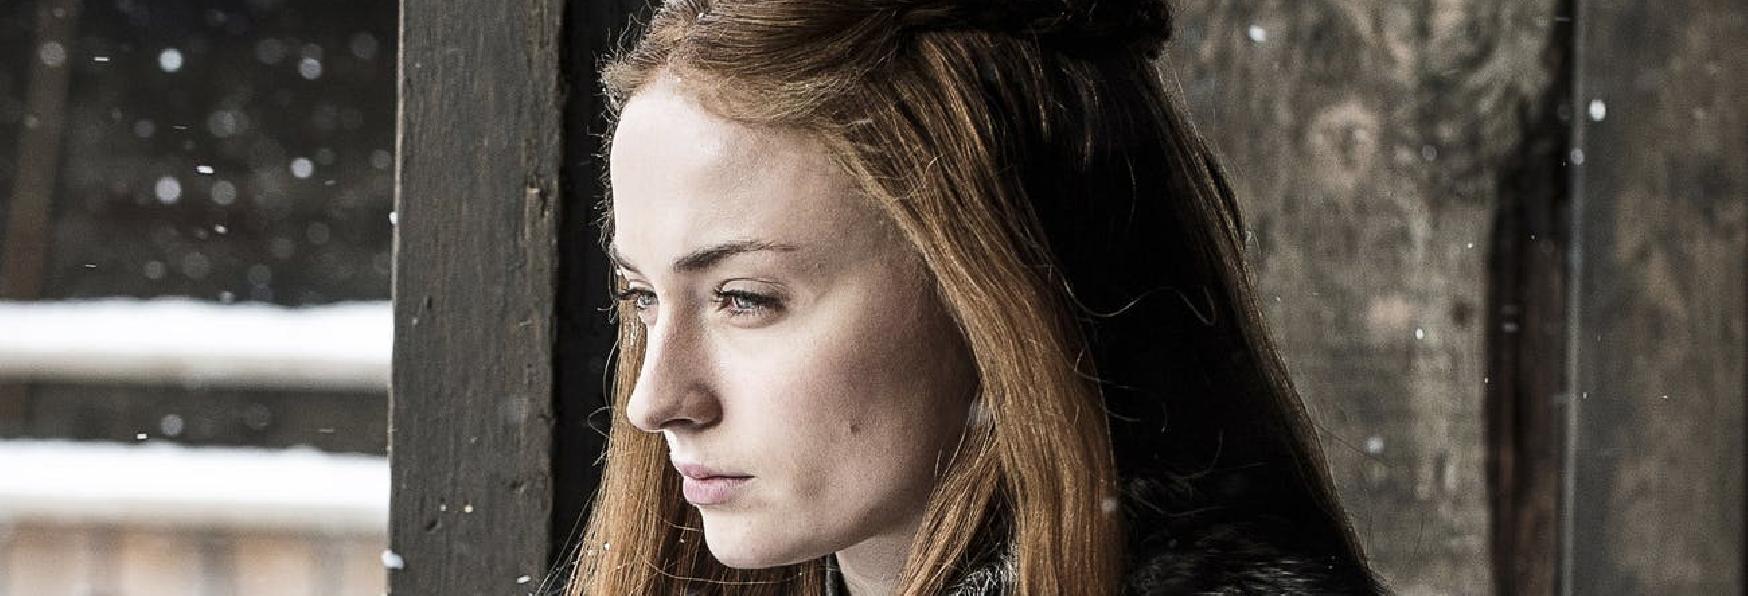 Sophie Turner (Sansa di Game of Thrones) e la sua Depressione Causata dai Social